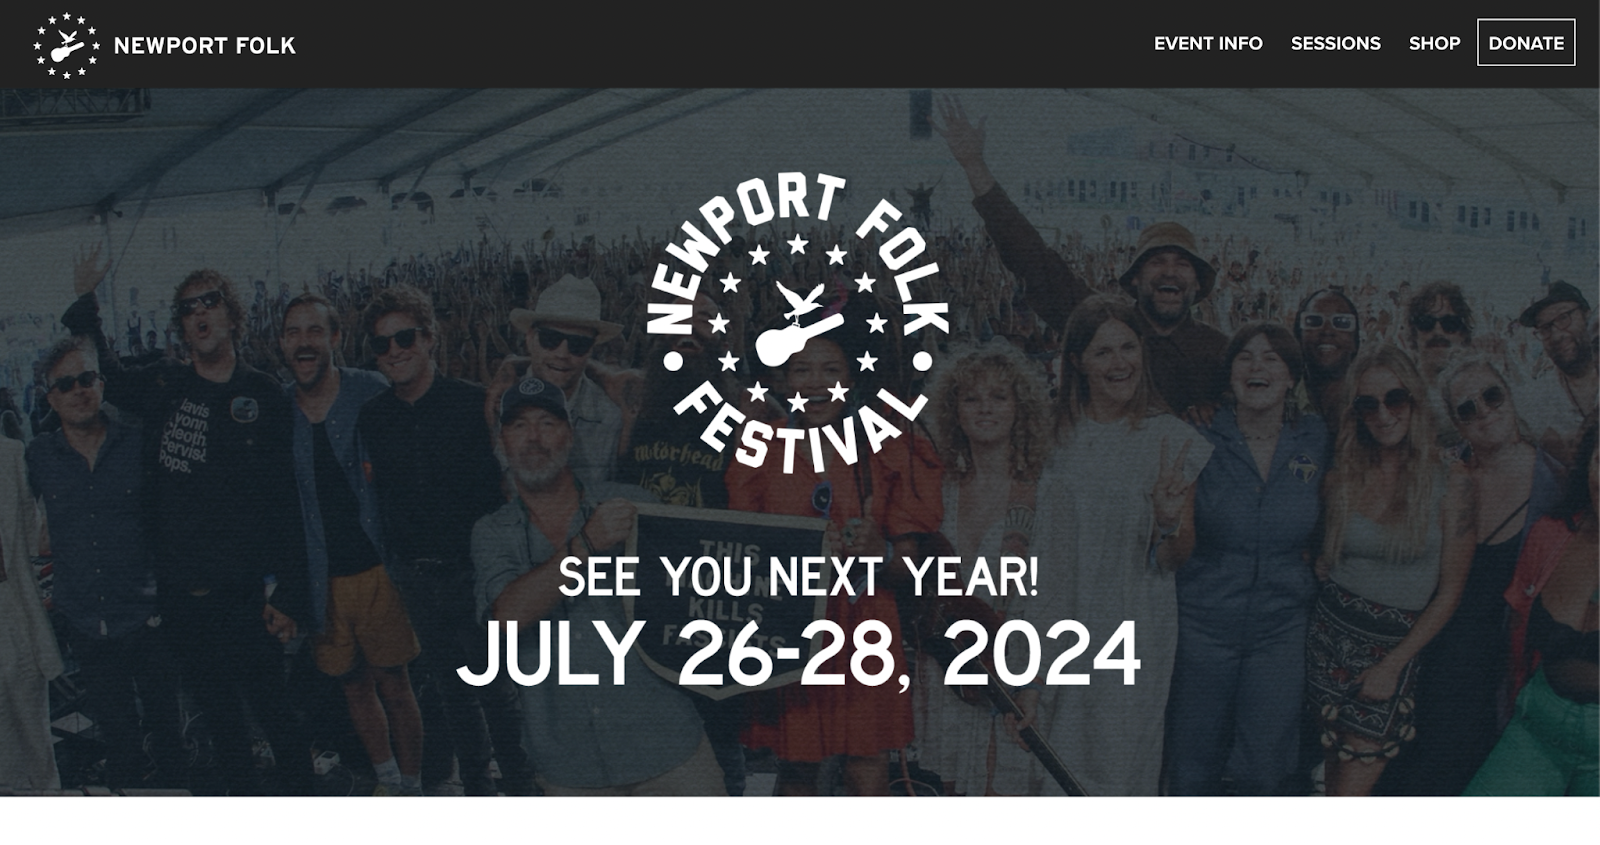 event website examples, new port folk festival